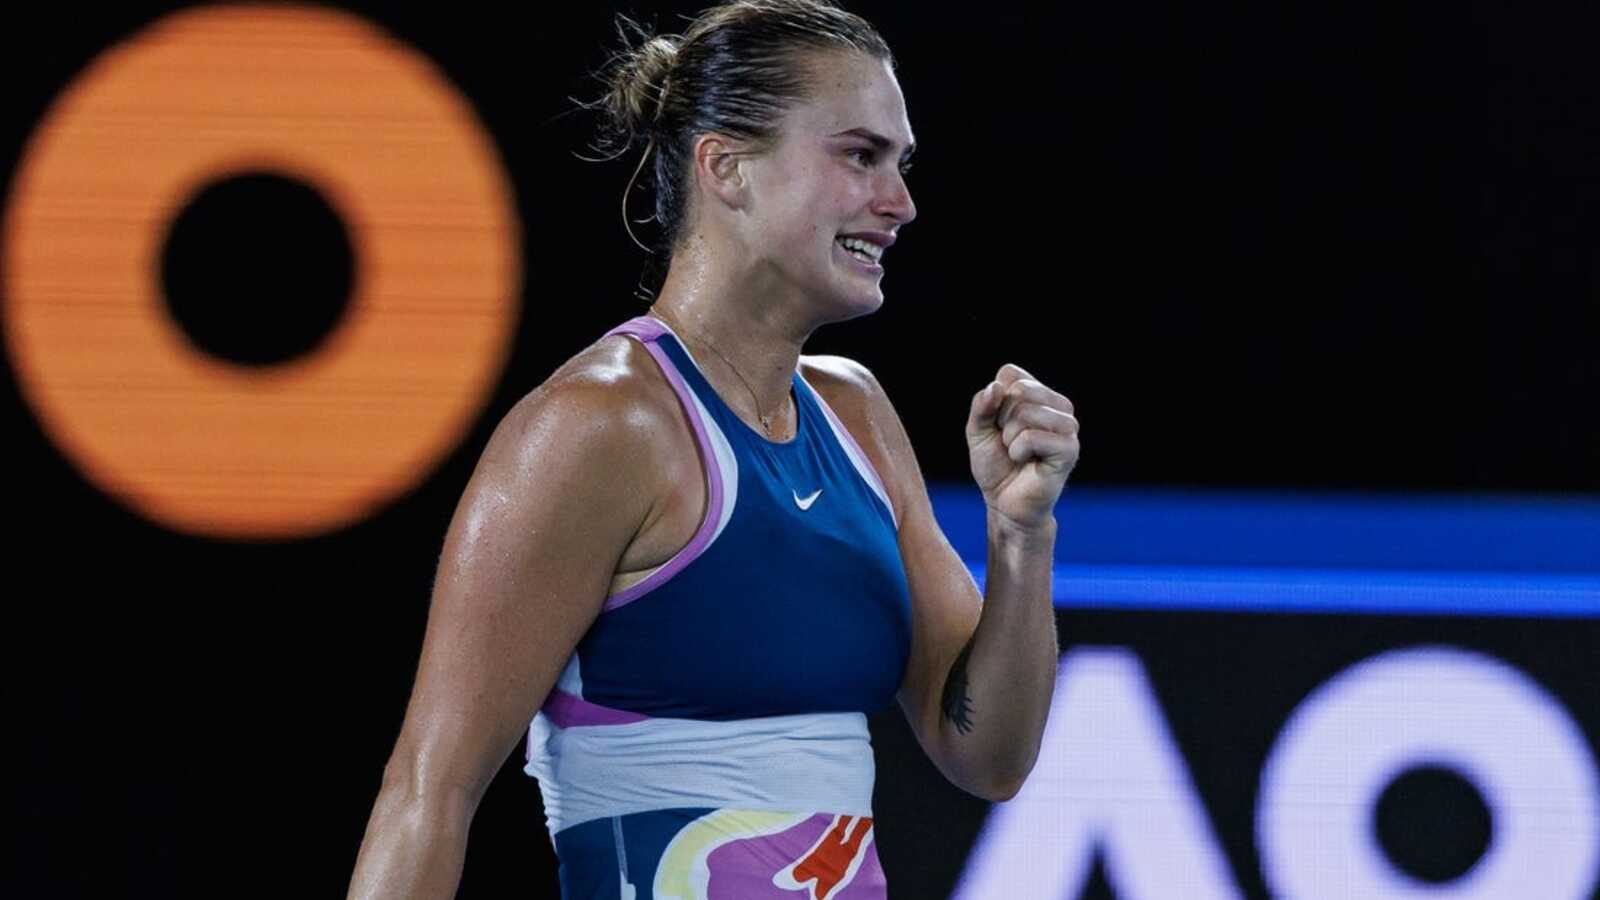 Arnya Sabalenka advances to Australian Open second round with ease